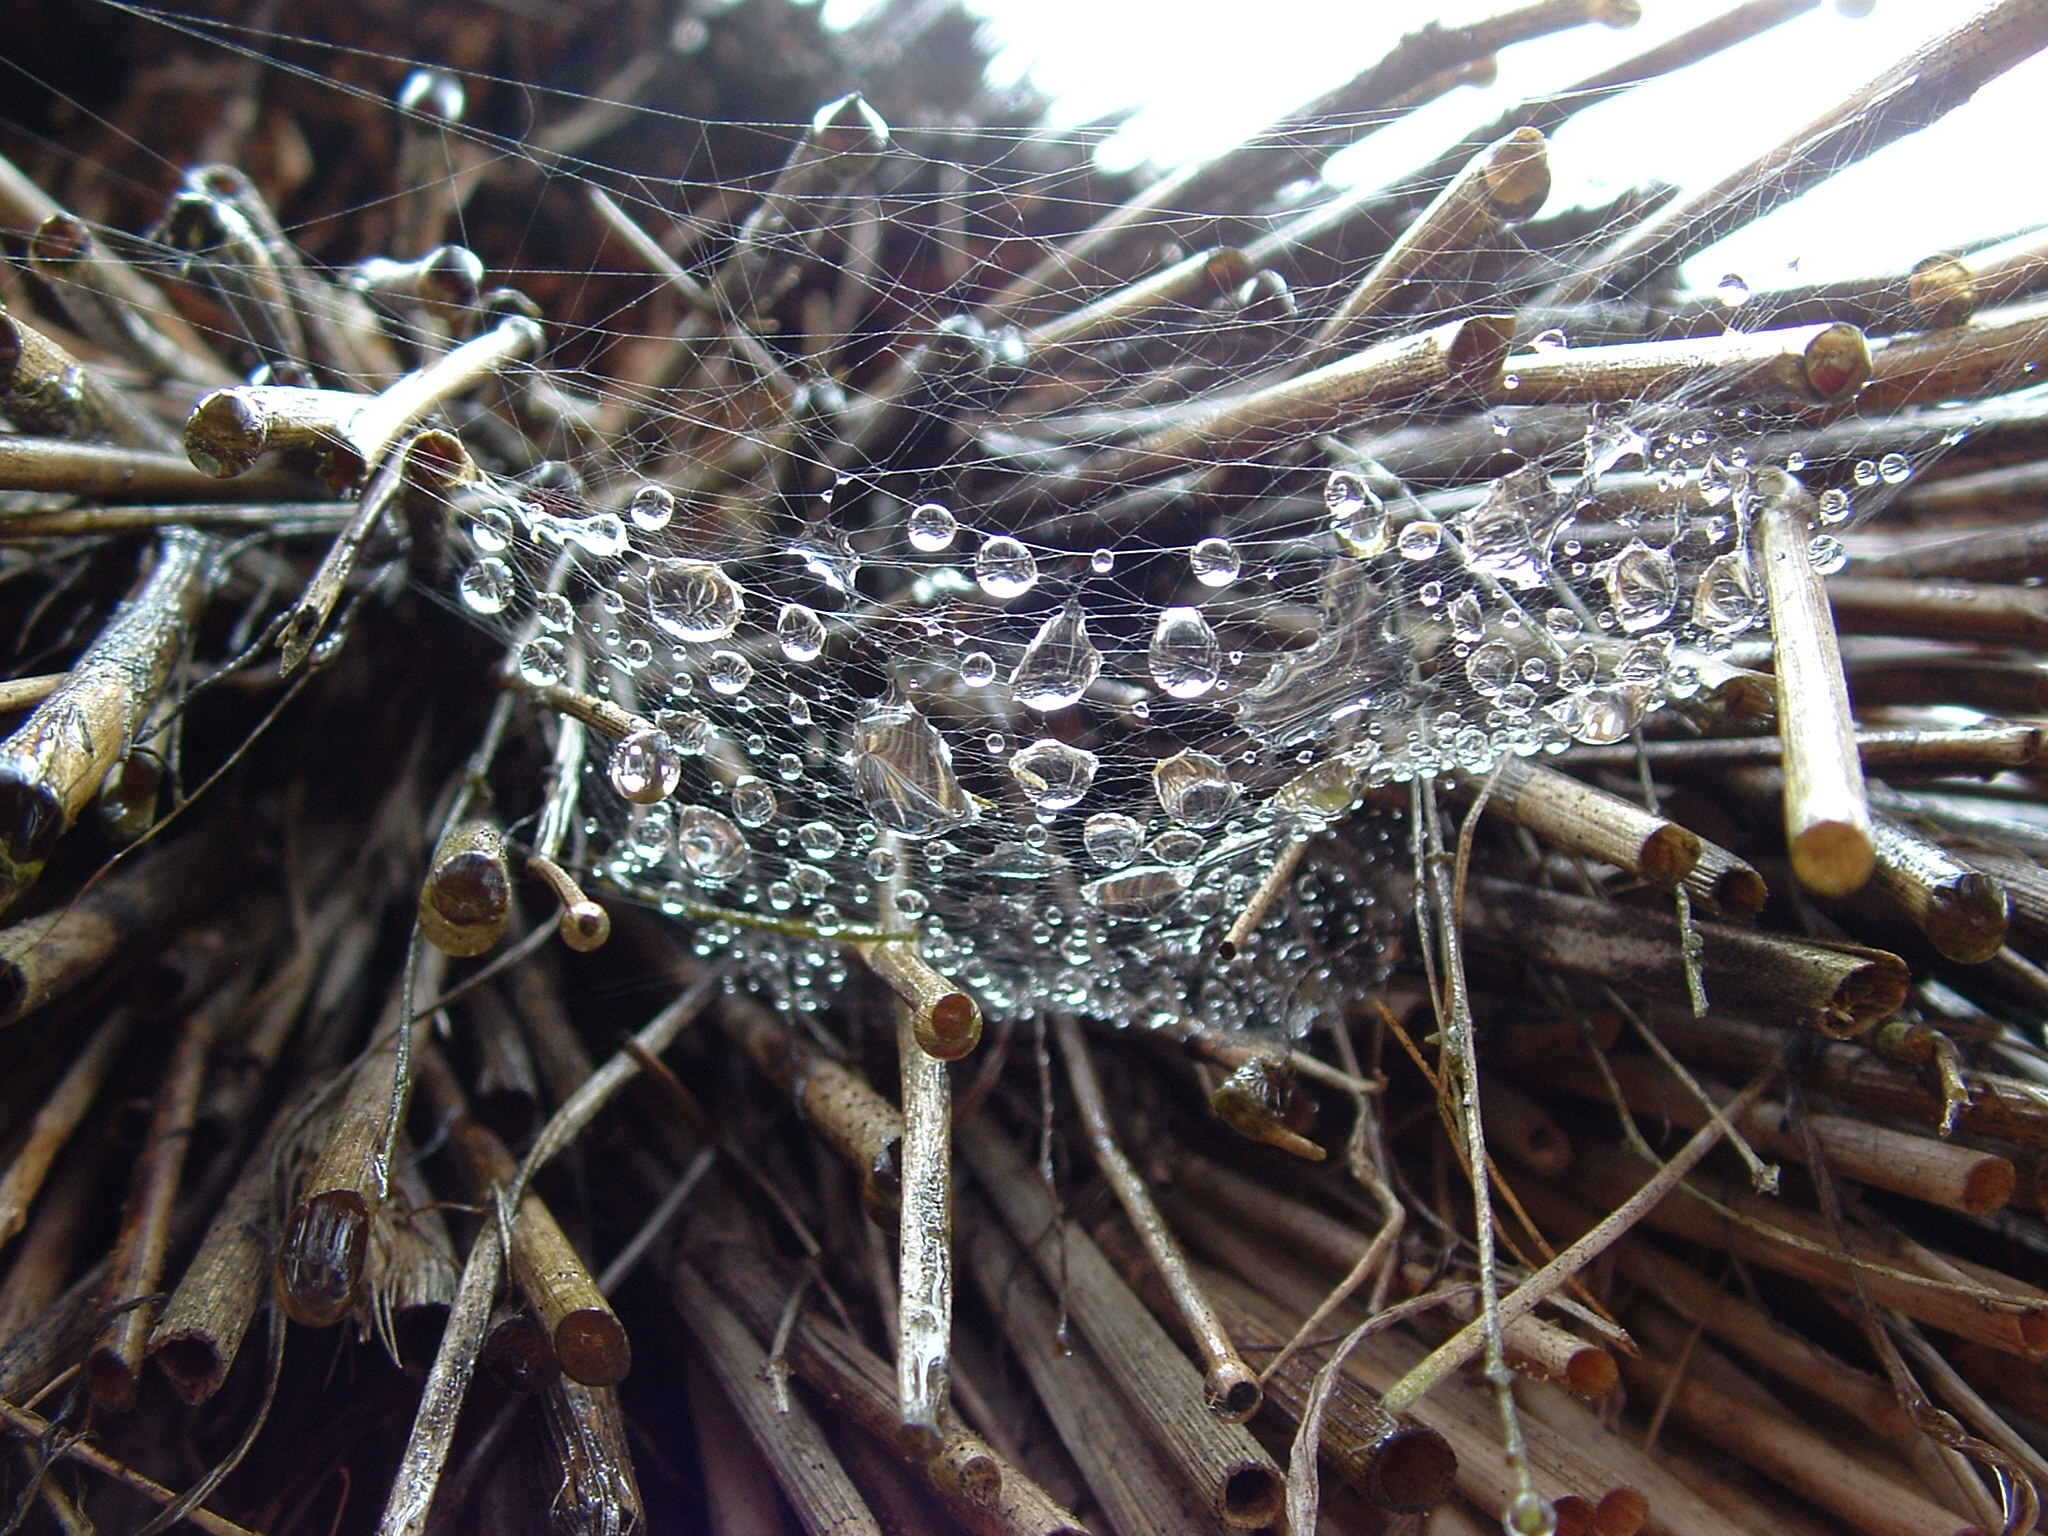 Photograph: Water Web